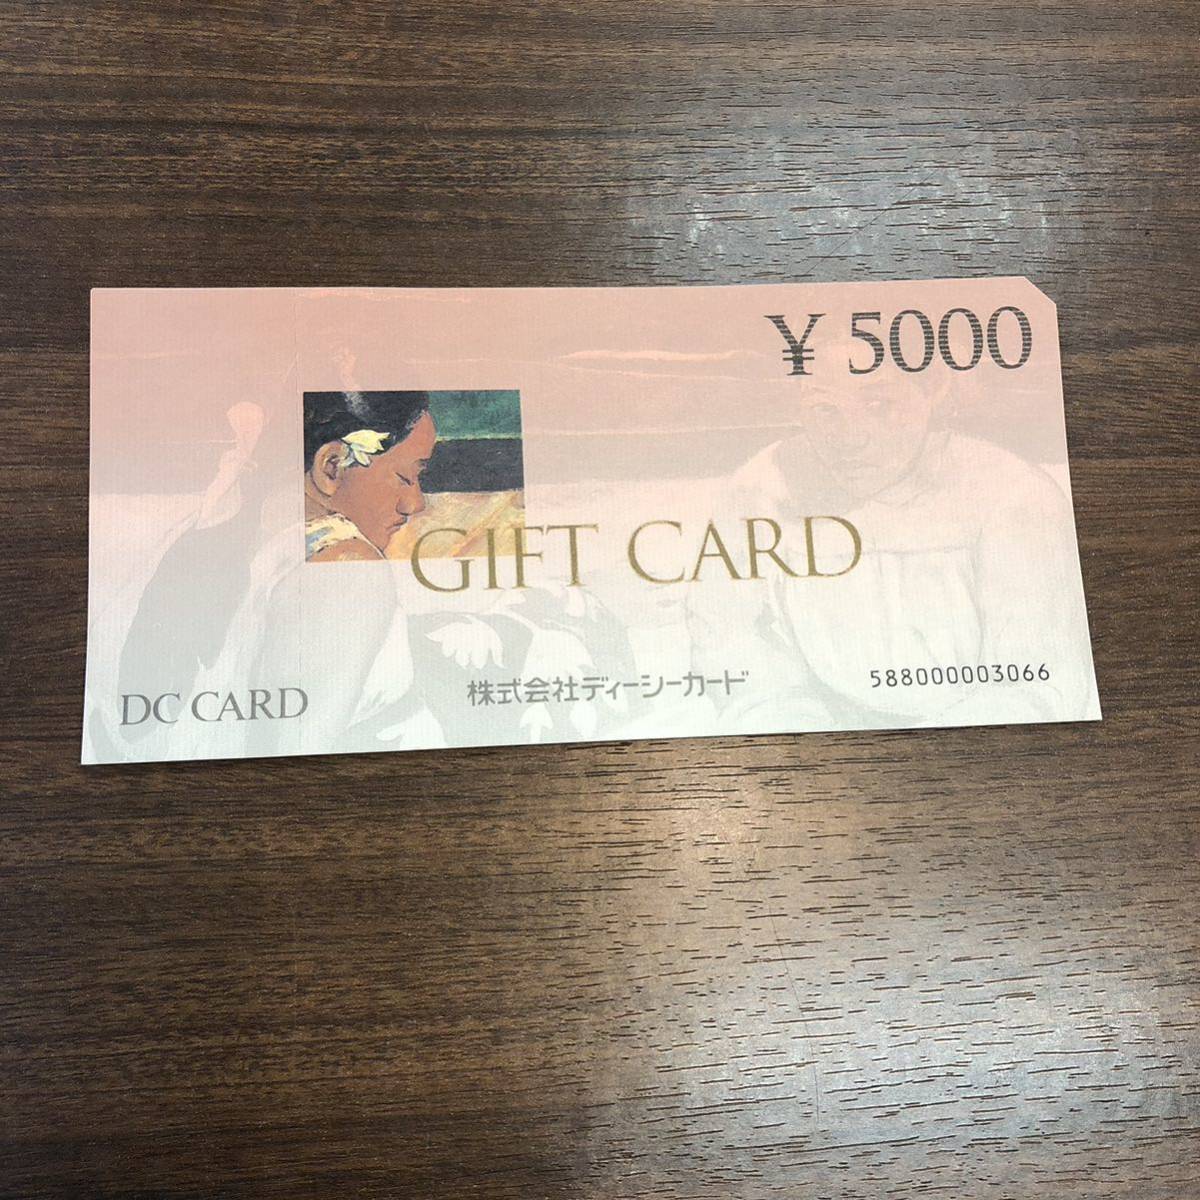 【DC CARD ギフトカード】GIFT CARD/株式会社ディーシーカード/旧柄/旧券/1000/5000/セット/未使用_画像2